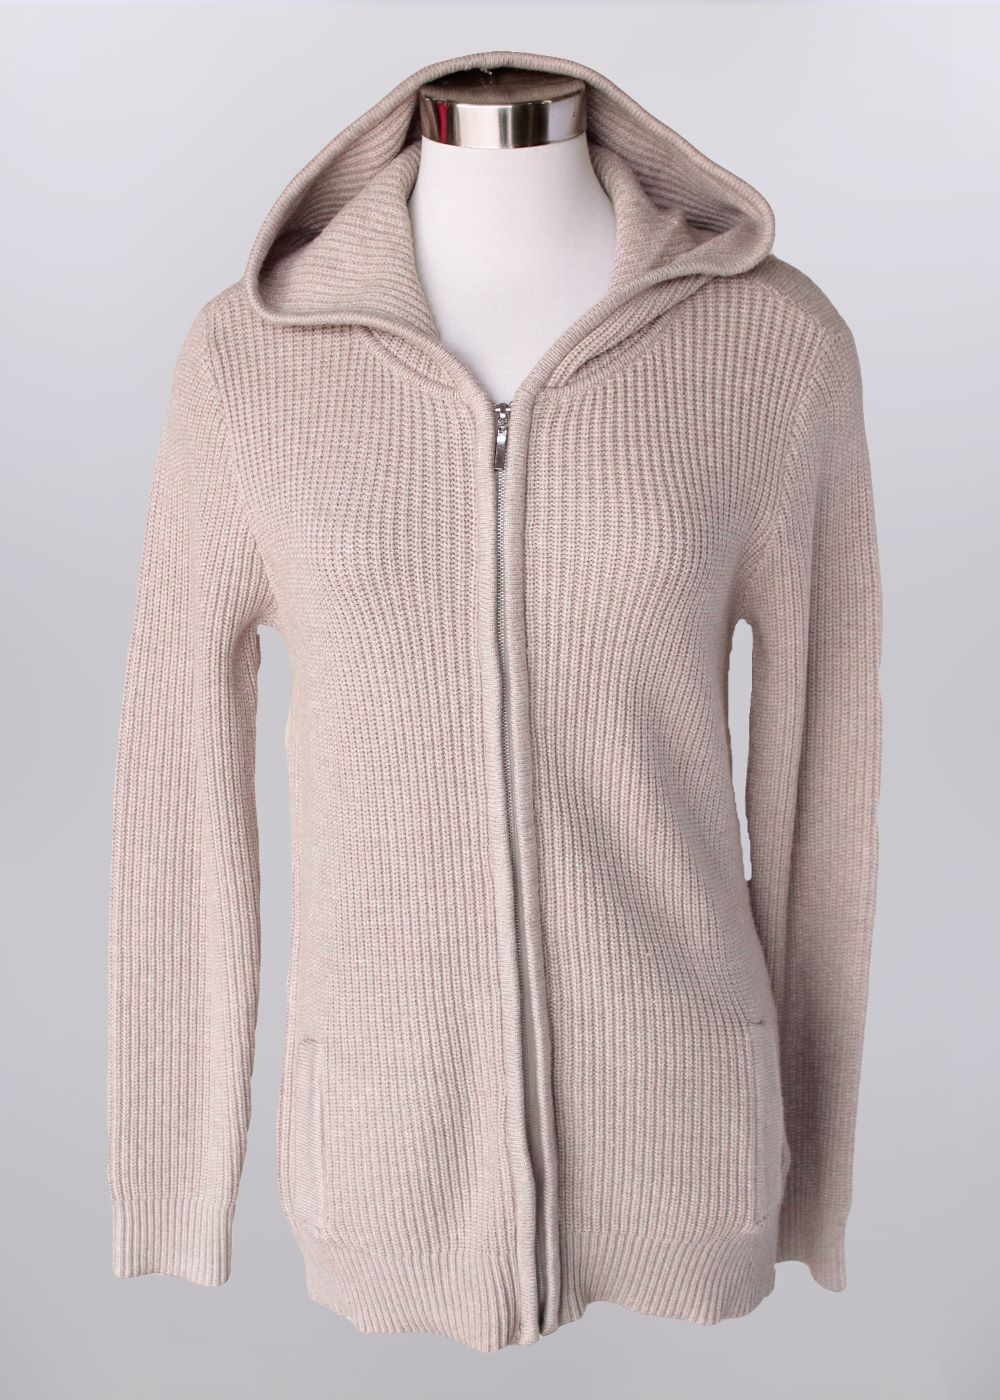 Irish Sweater Coat with Zipper and Hood | St. Patrick's Guild